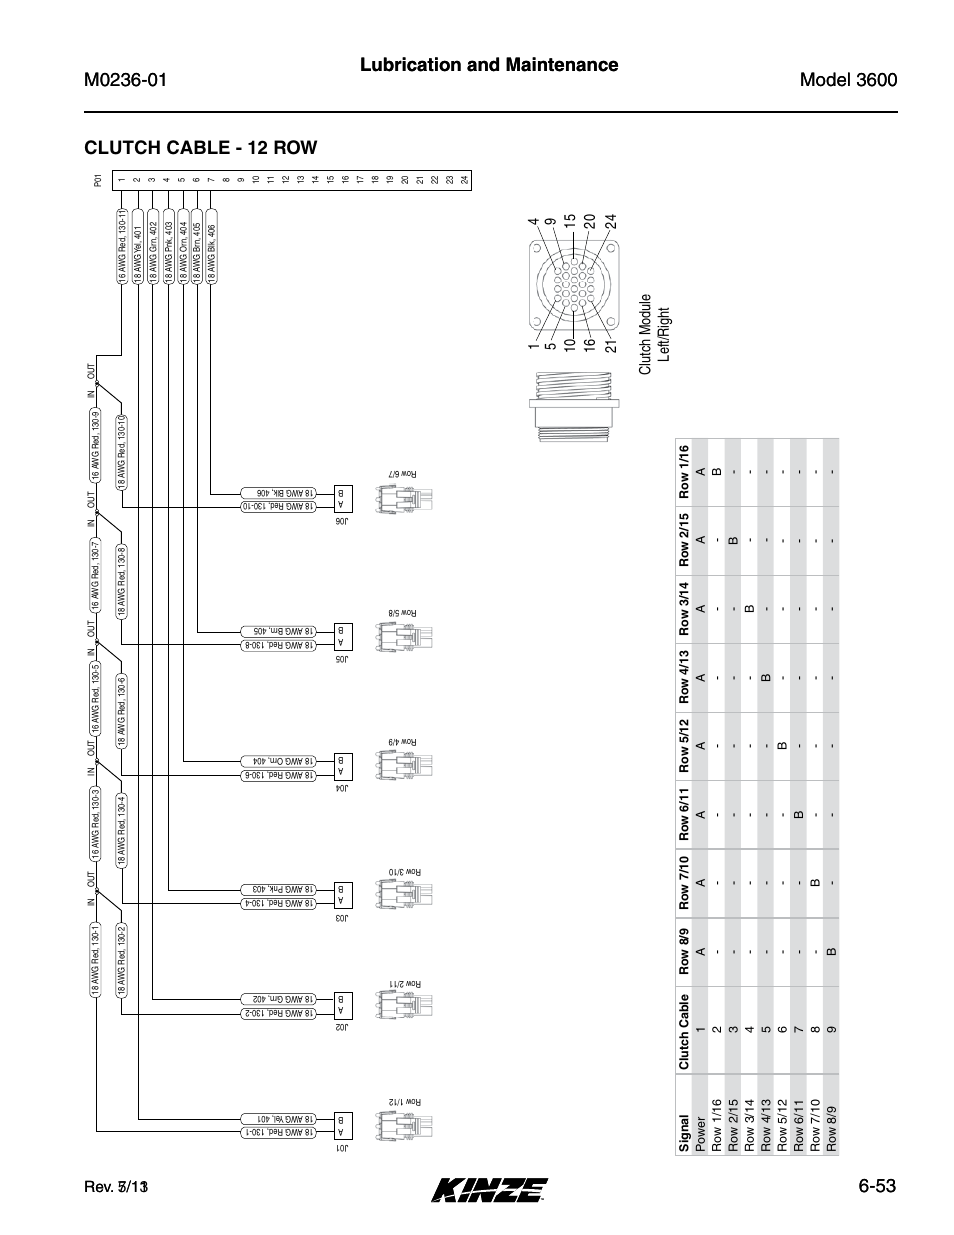 Clutch cable - 12 row, Signal, Clutch cable | Row 8/9, Row 7/10, Row 6/11, Row 5/12, Row 4/13, Row 3/14, Row 2/15 | Kinze 3600 Lift and Rotate Planter Rev. 7/14 User Manual | Page 161 / 172